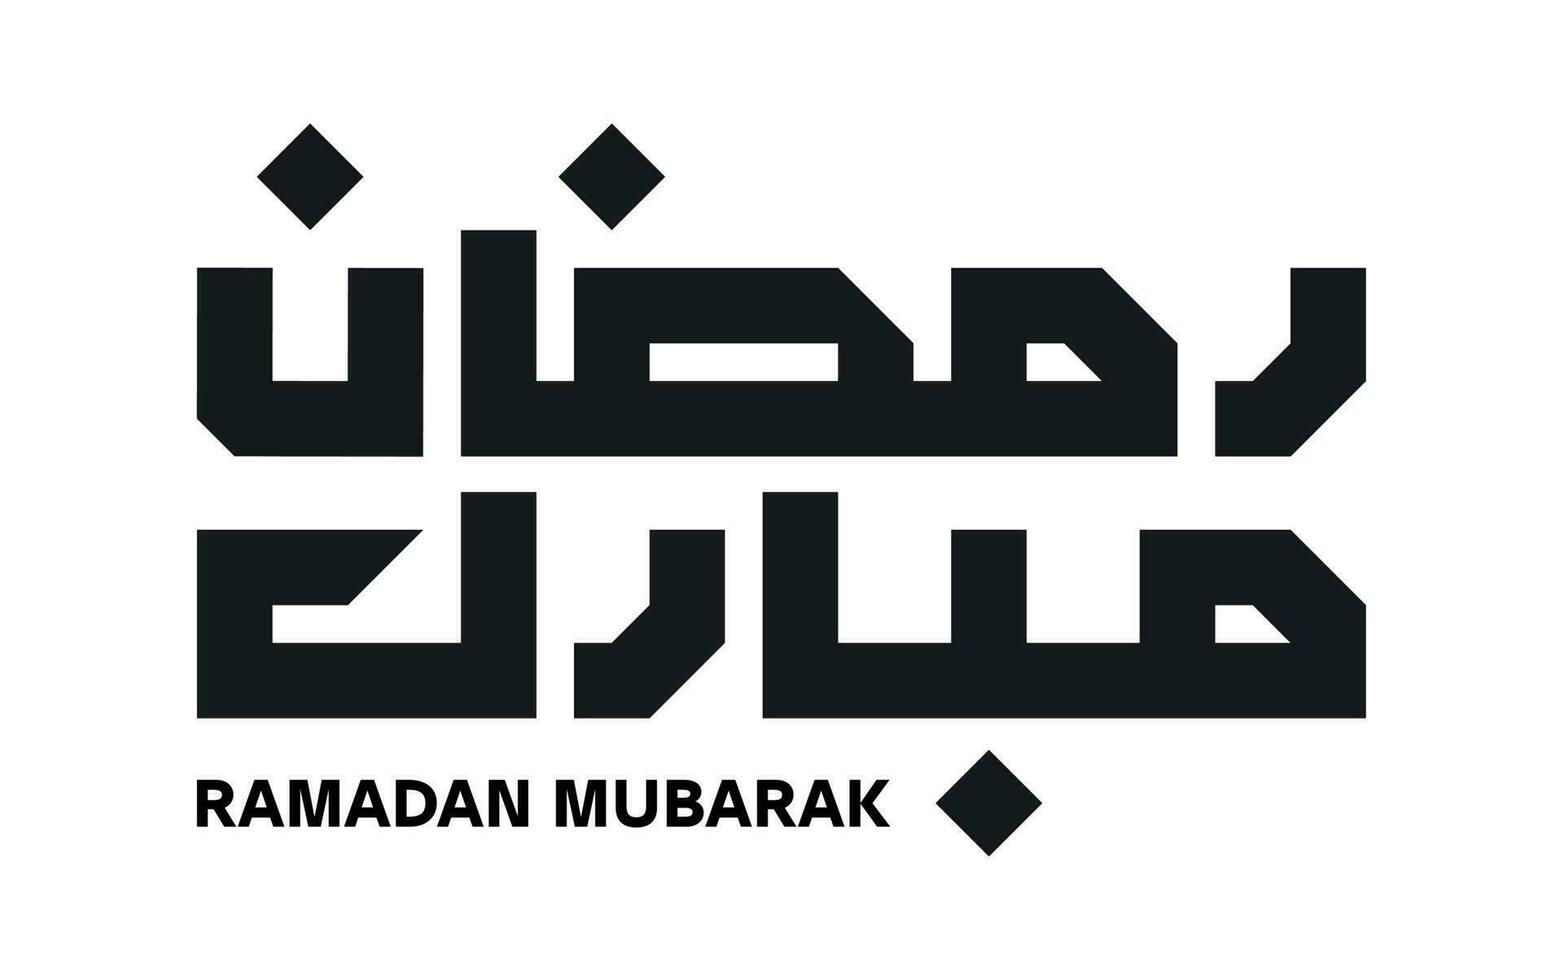 ny kufi vinklad kalligrafi design med de ord ramadan kareem i arabicum vektor